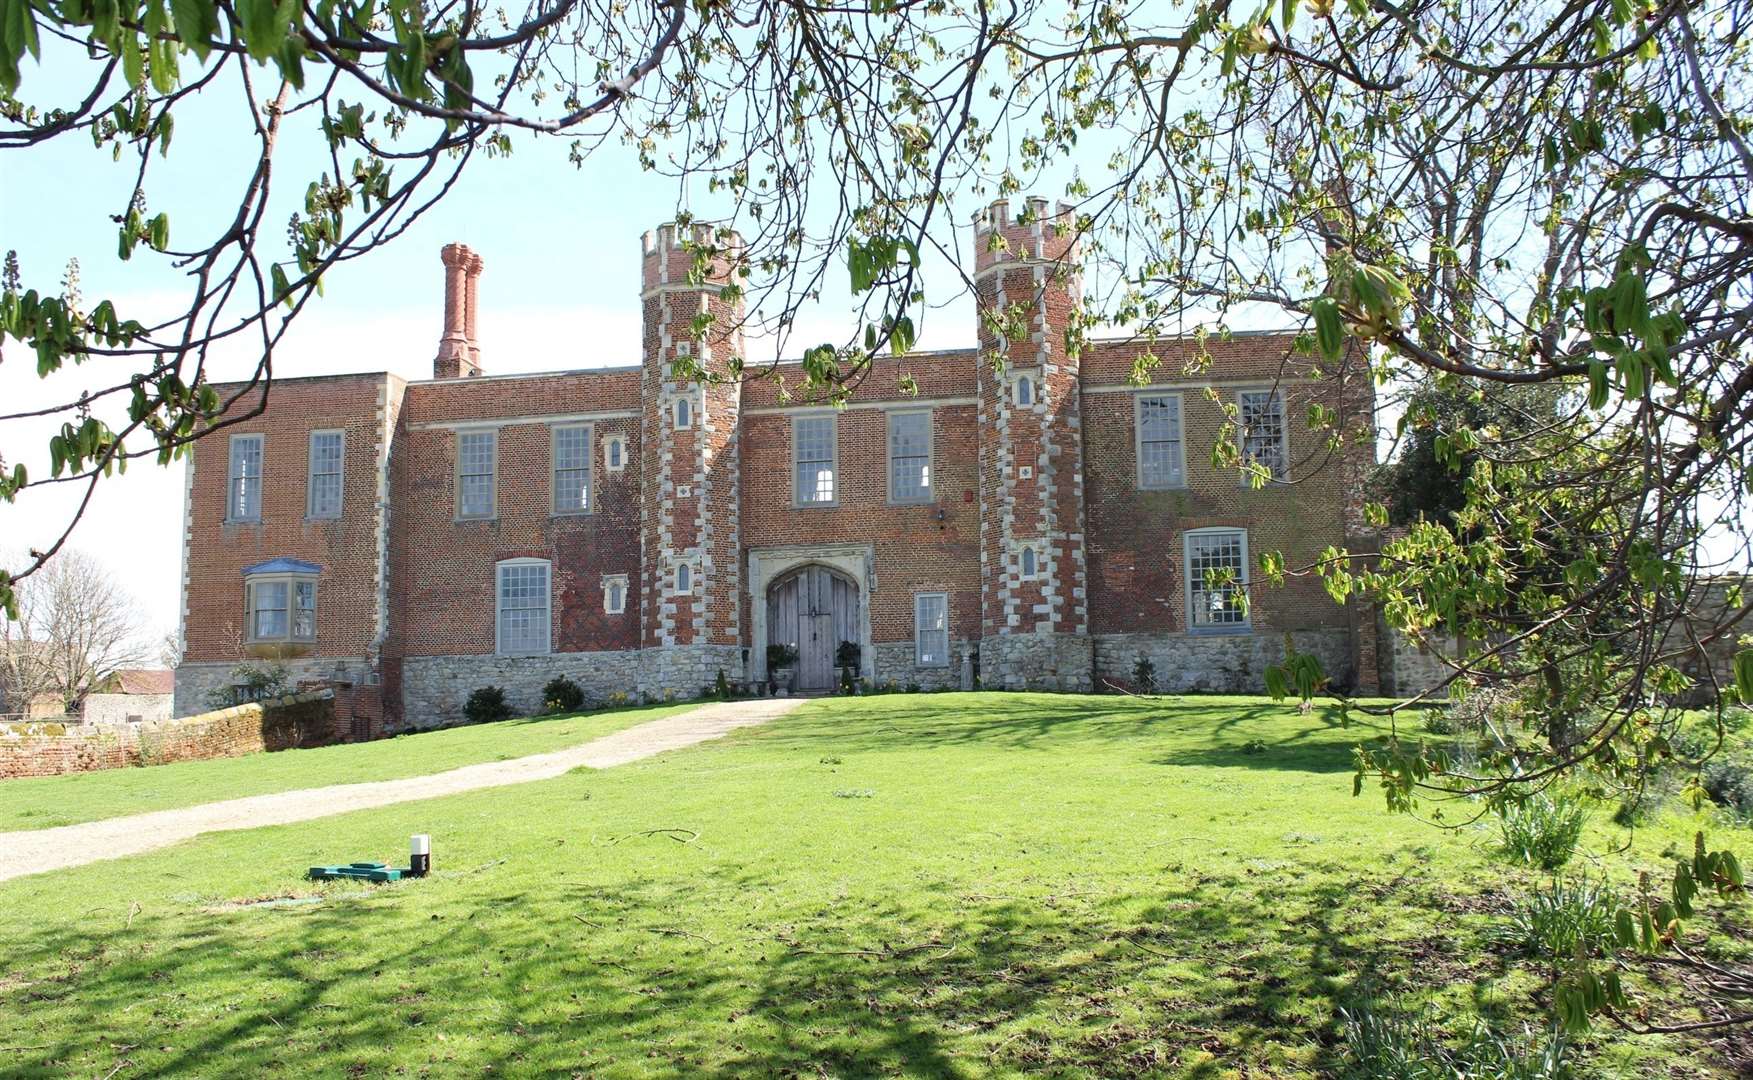 Former Tudor manor Shurland Hall at Eastchurch where Sir Robert Shurland lived. Picture: John Nurden